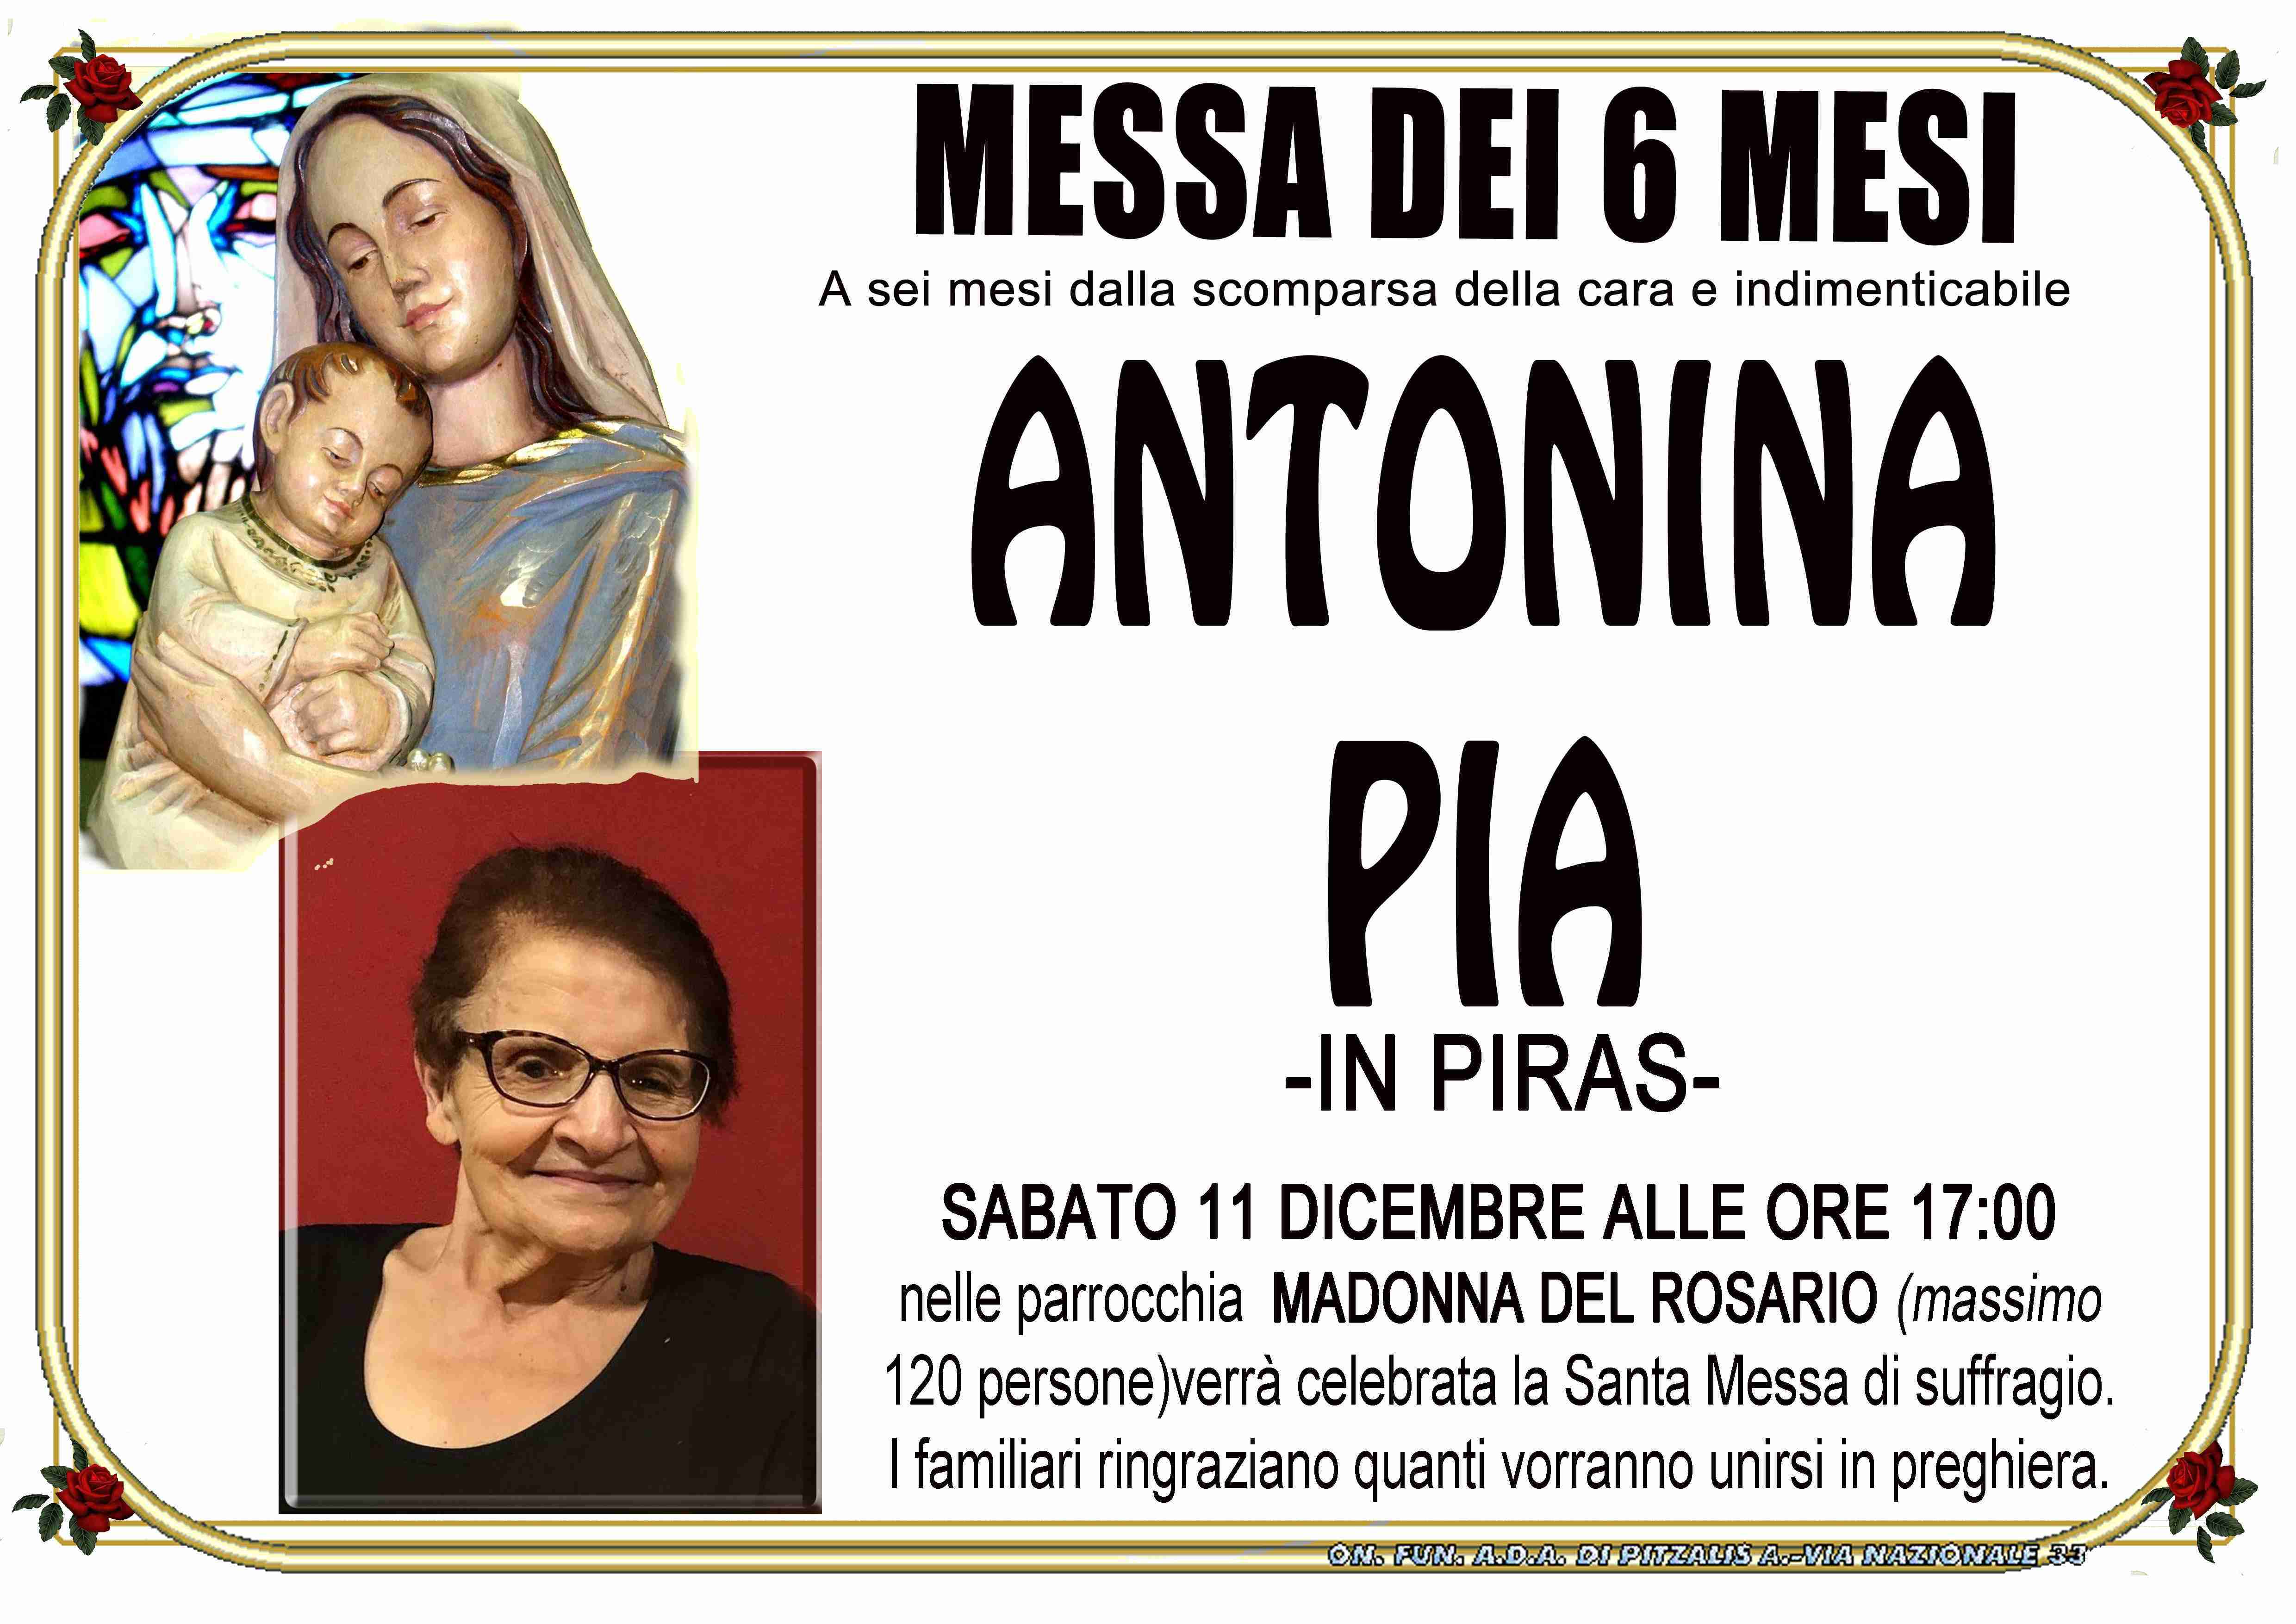 Antonina Pia